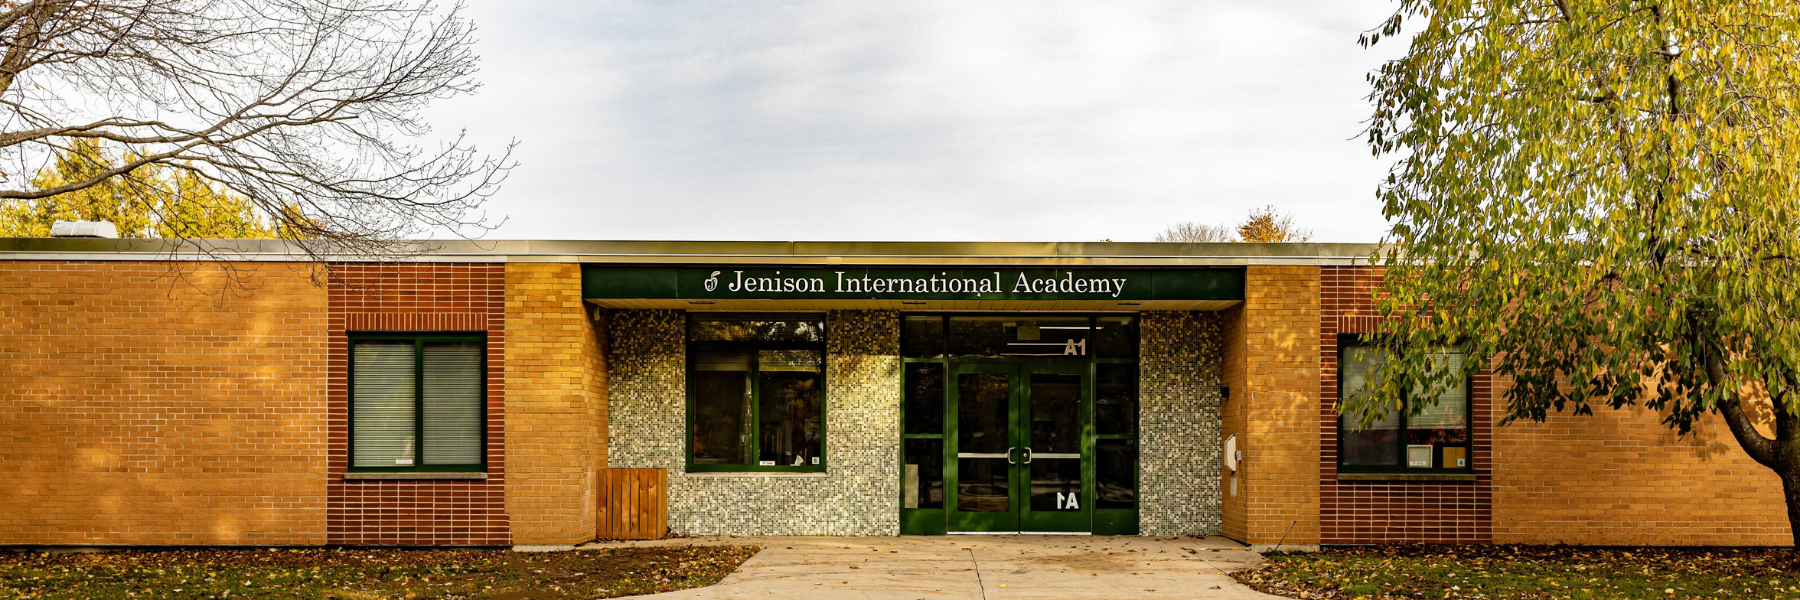 Jenison International Academy Local Campus Building